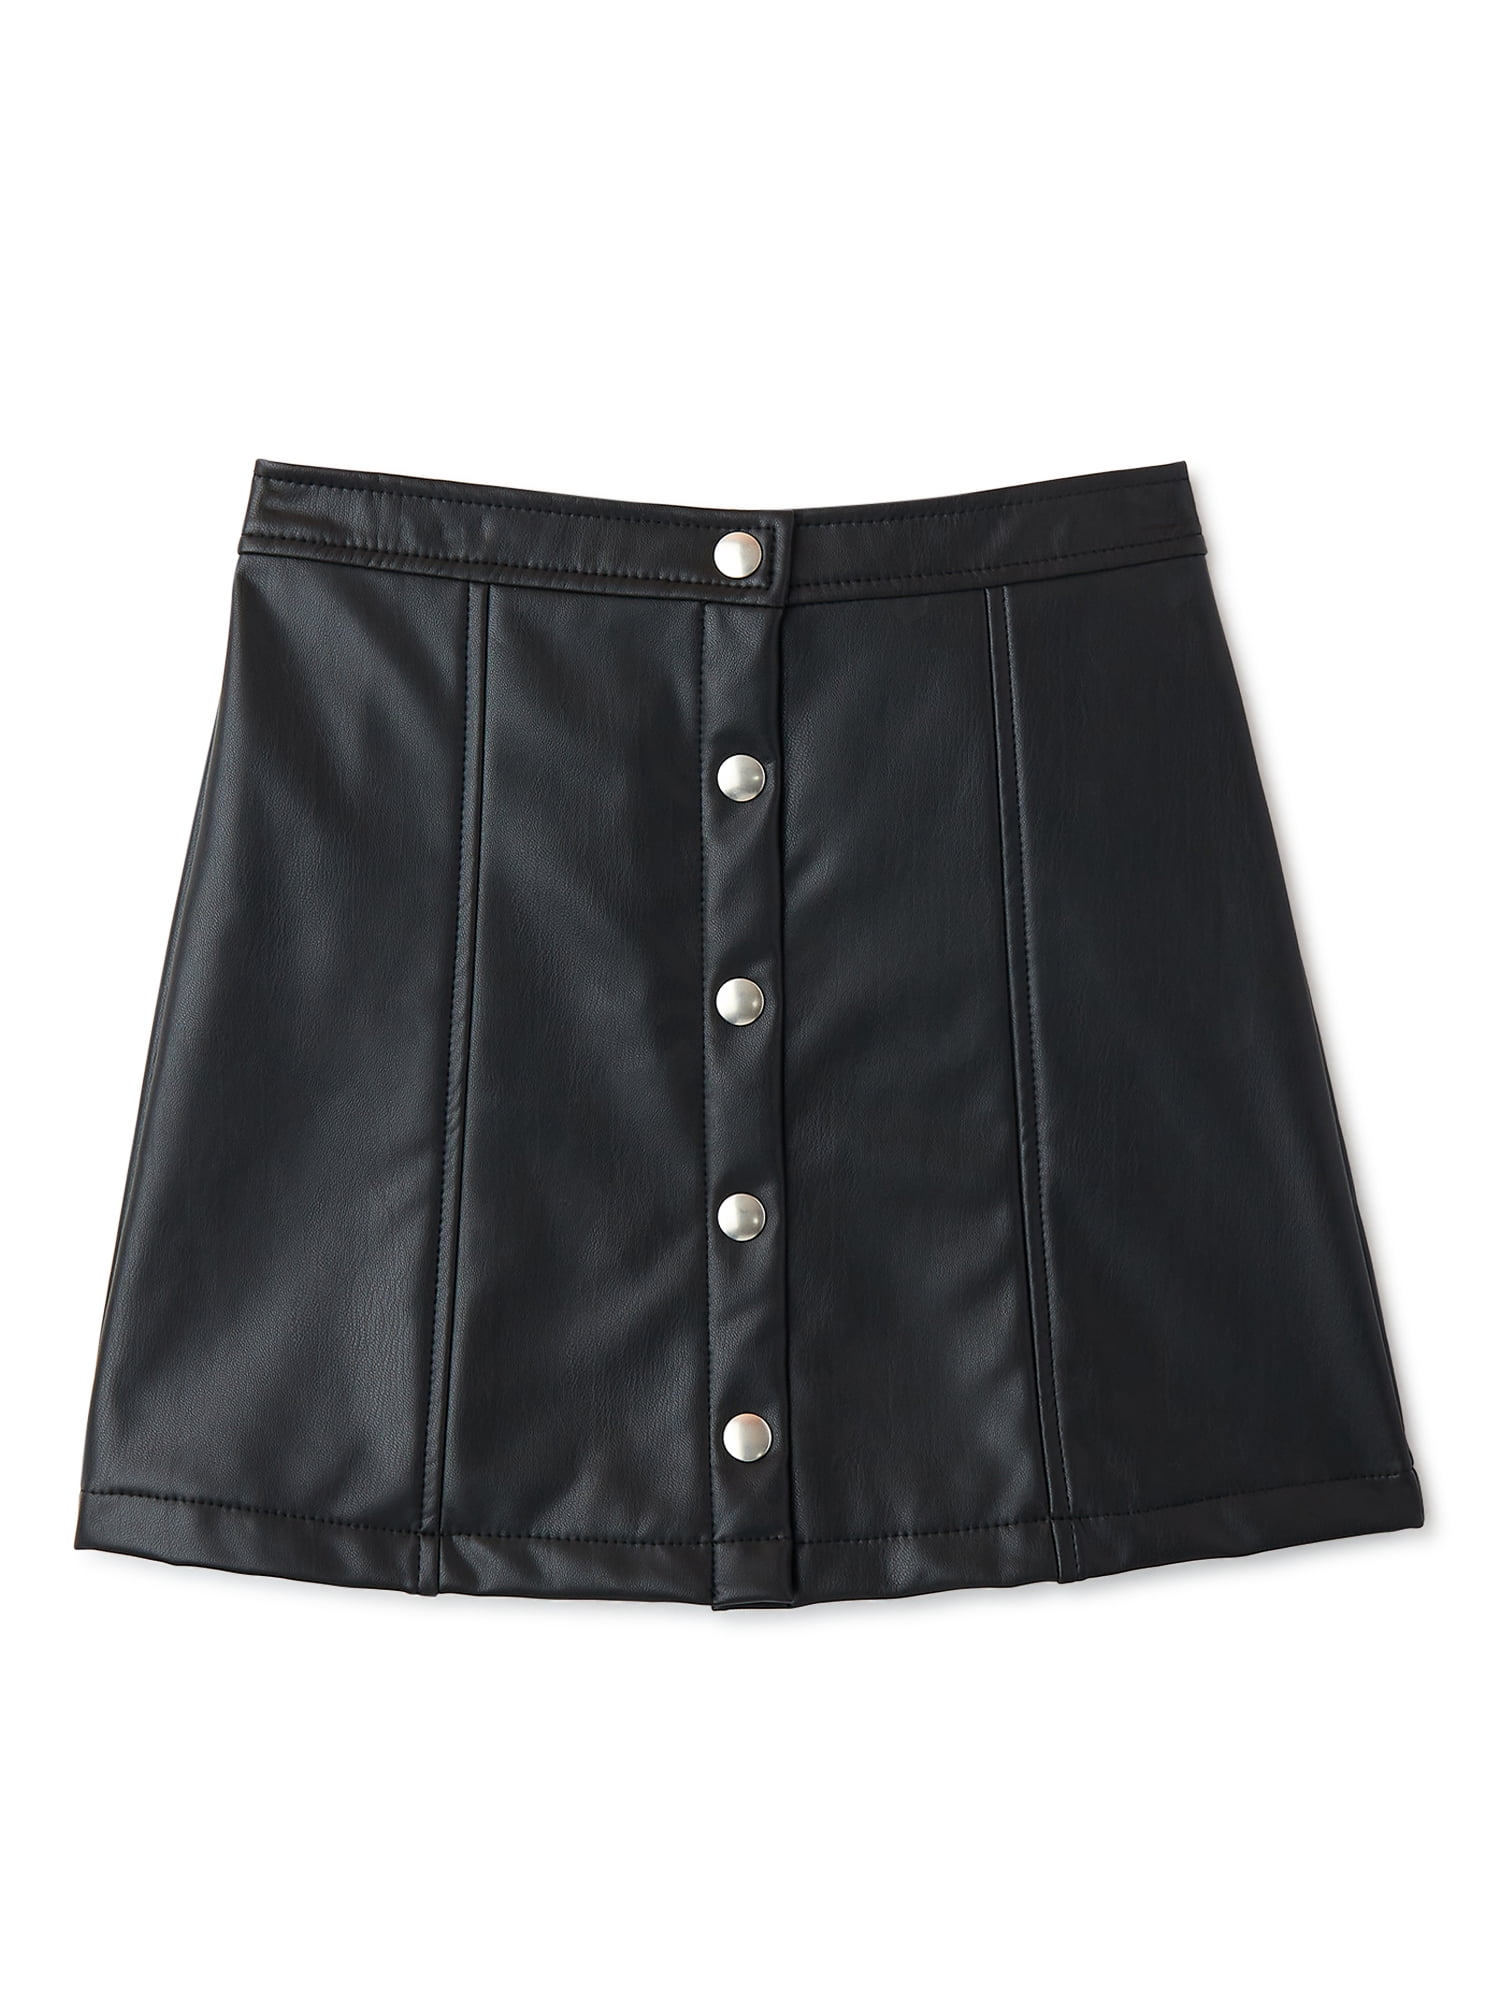 Wonder Nation Girls Faux Leather Skirt, Sizes 4-18 & Plus